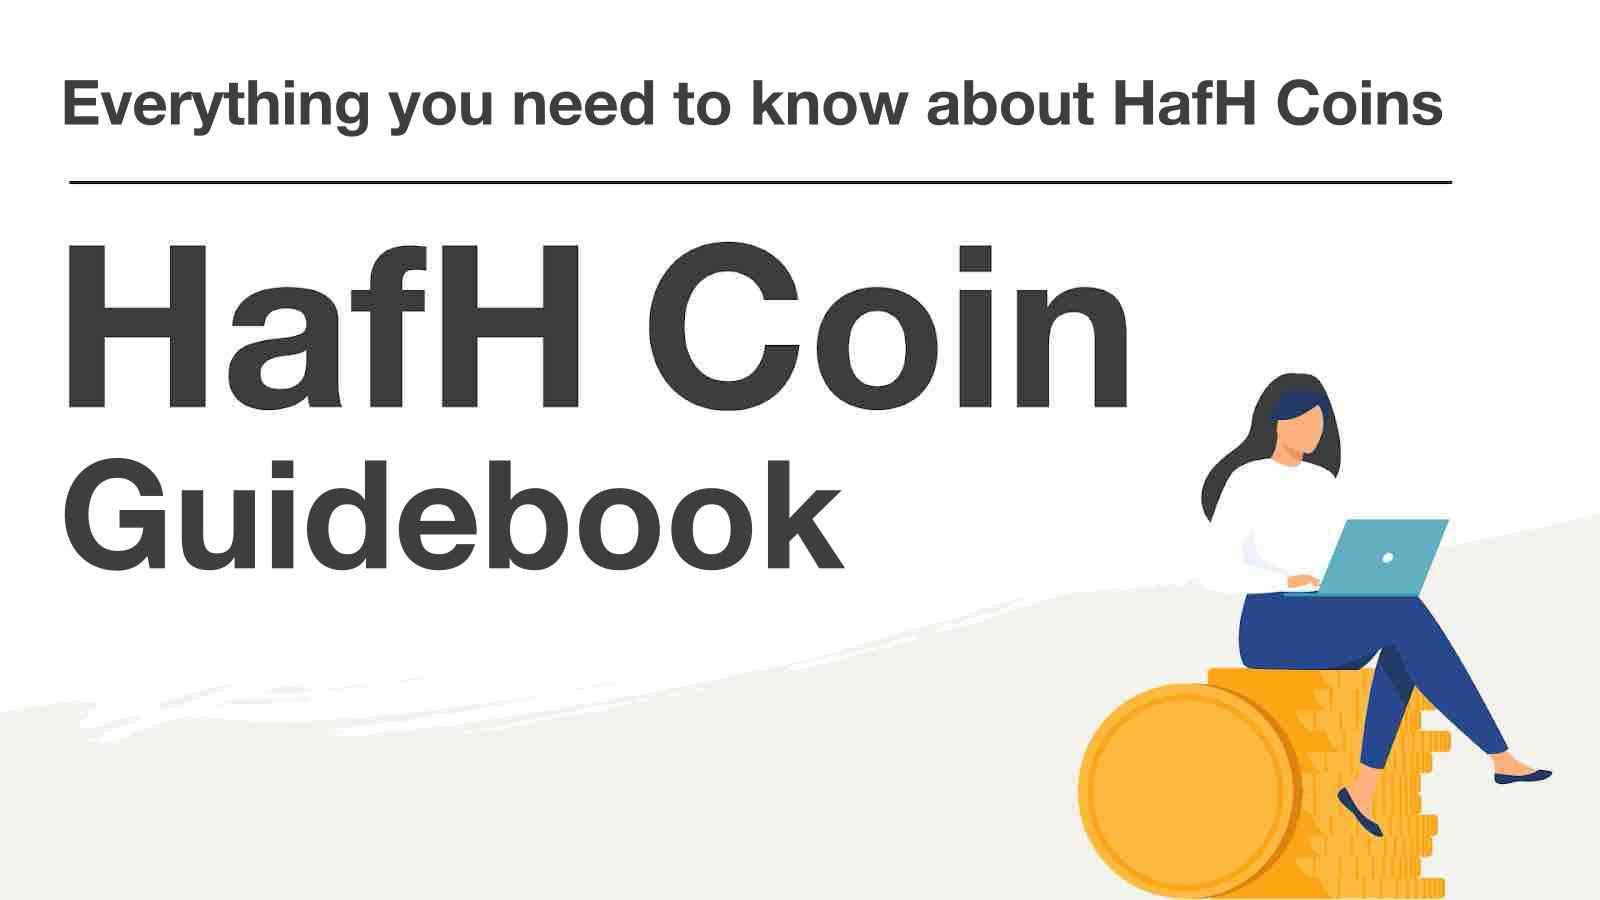 HafH Coin Guidebook